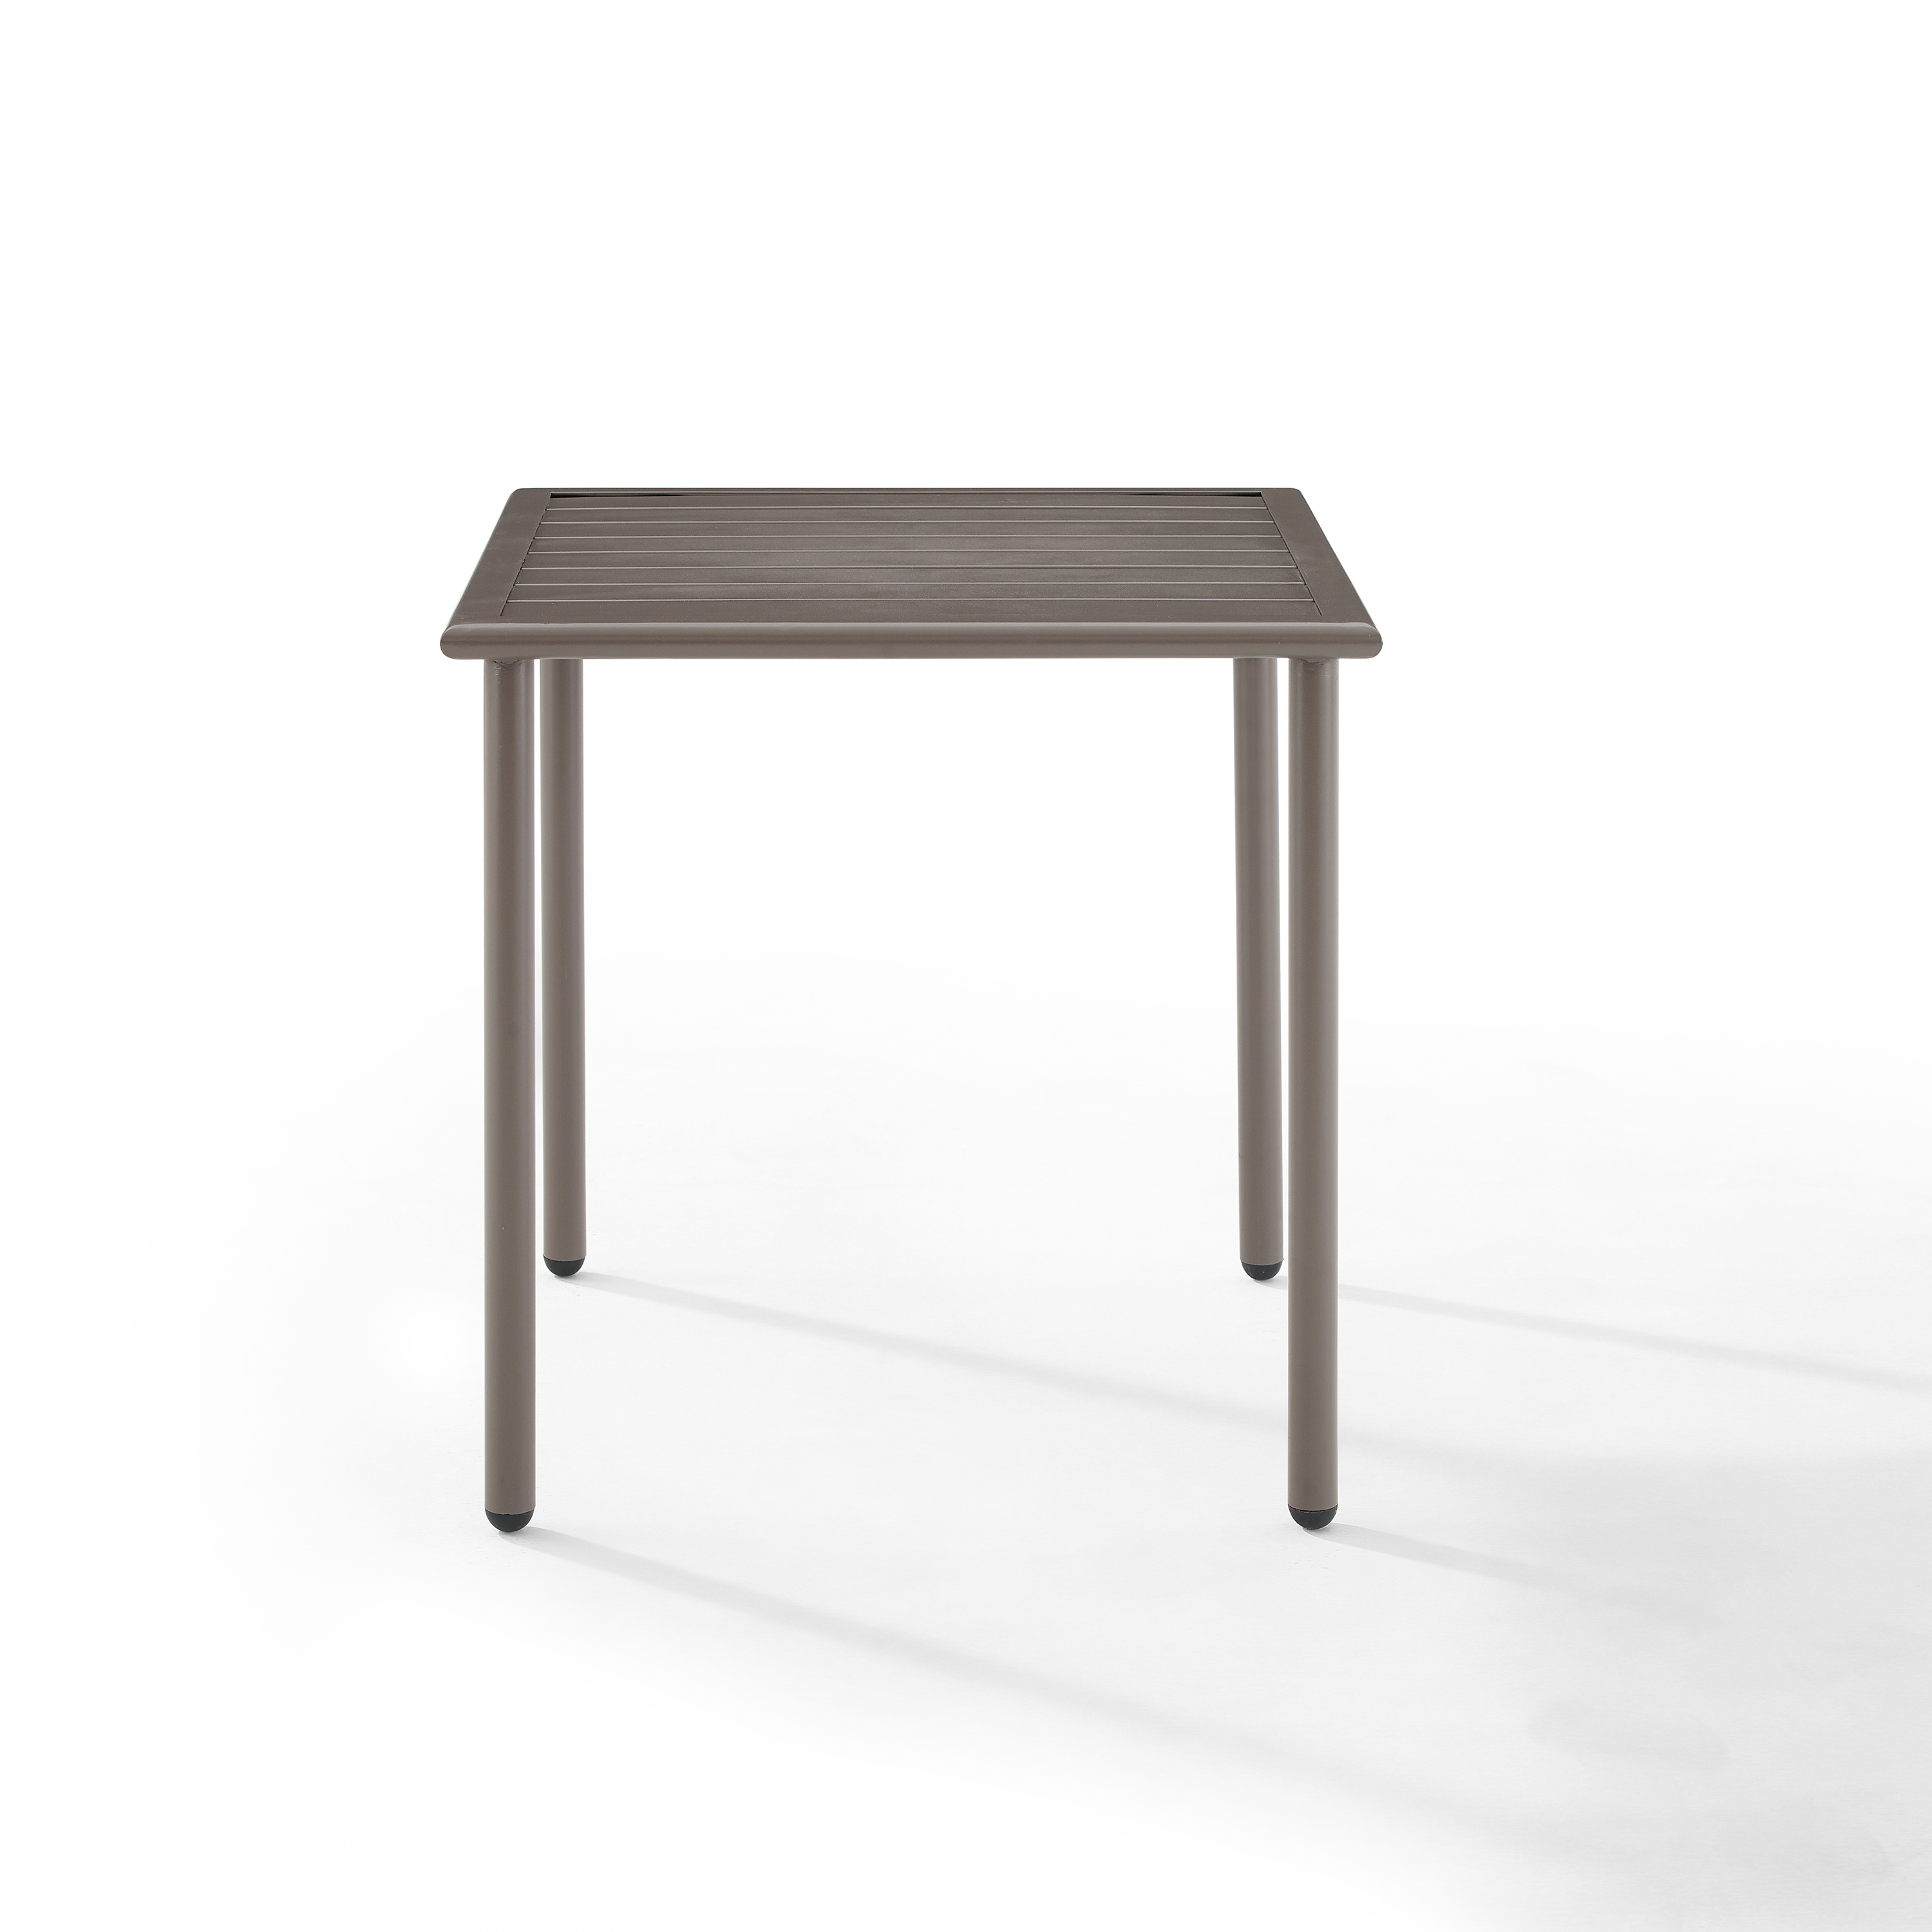 Crosley Furniture Cali Bay Modern Metal Outdoor Side Table in Light Brown - image 4 of 6